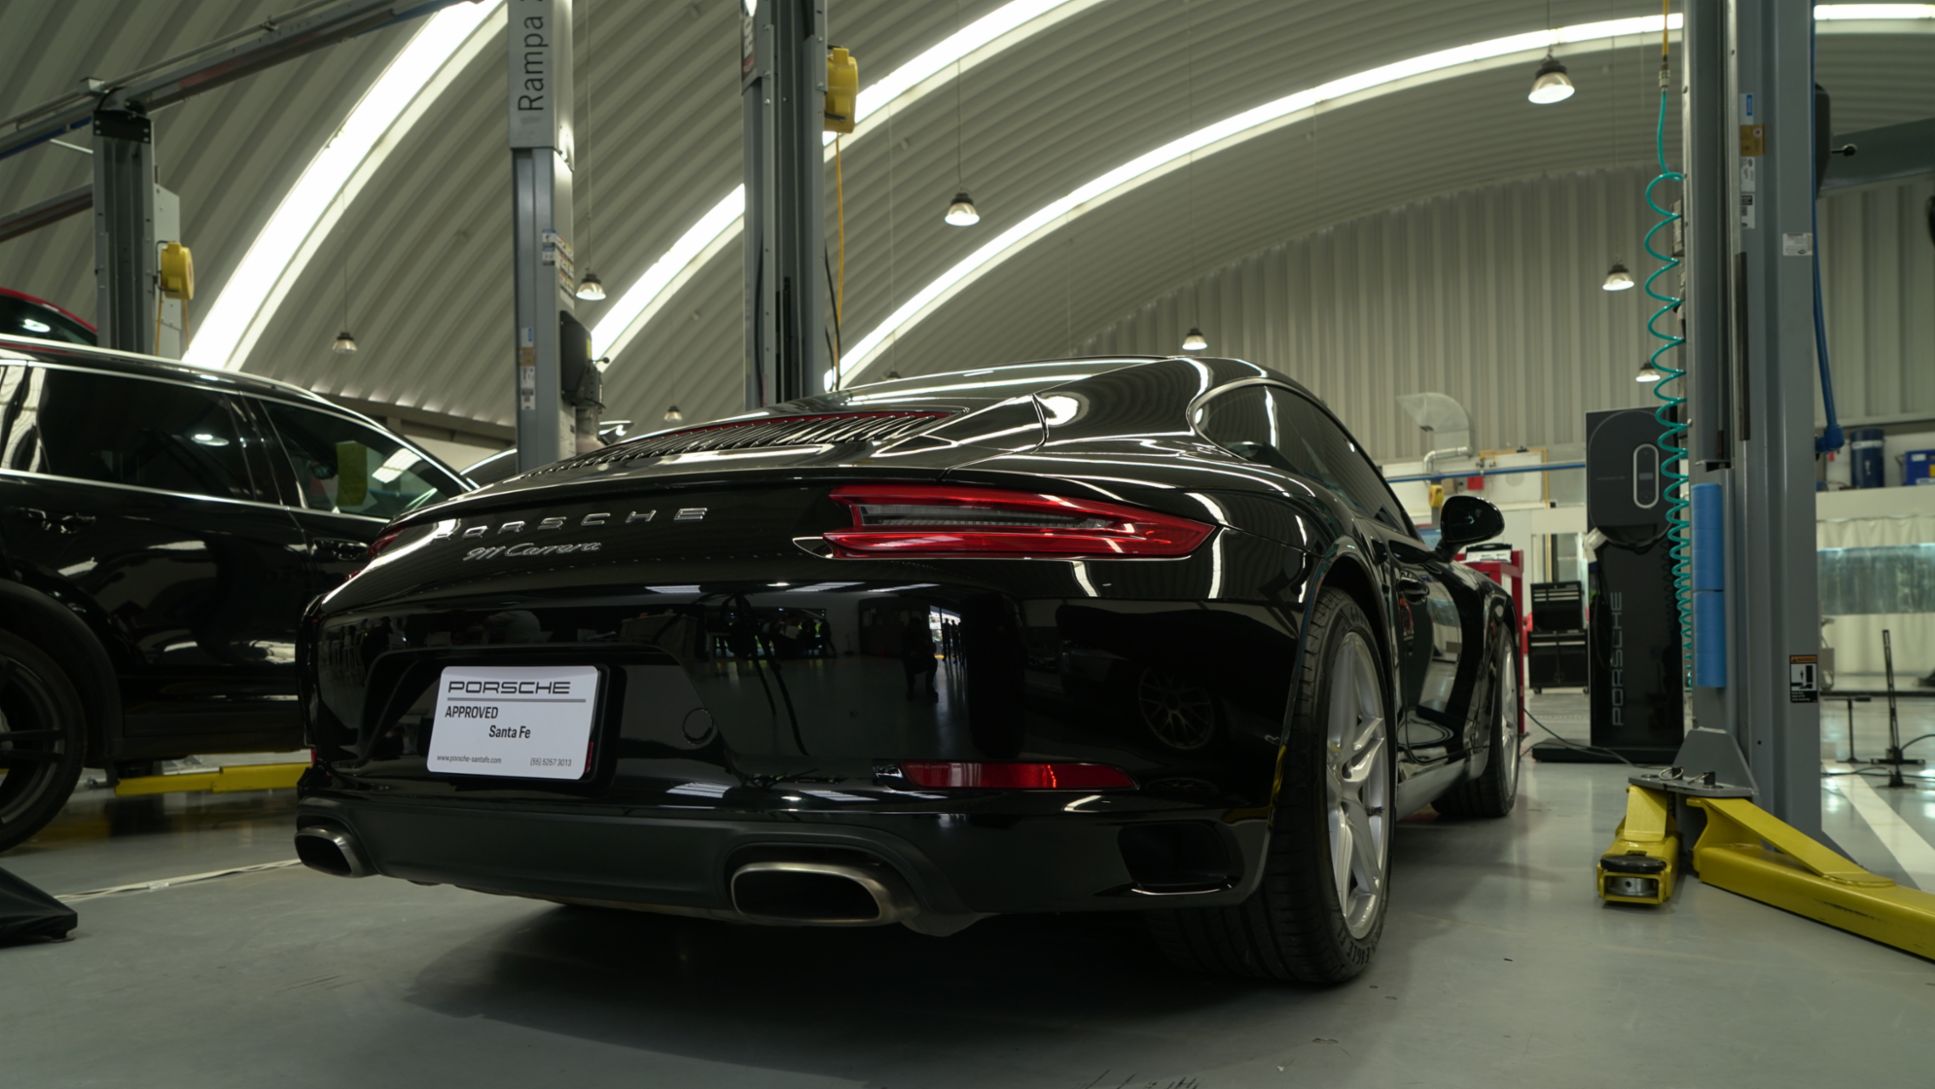 911 en el Porsche Pre-owned Car Centre listo para su certificación como vehículo "Porsche Approved"